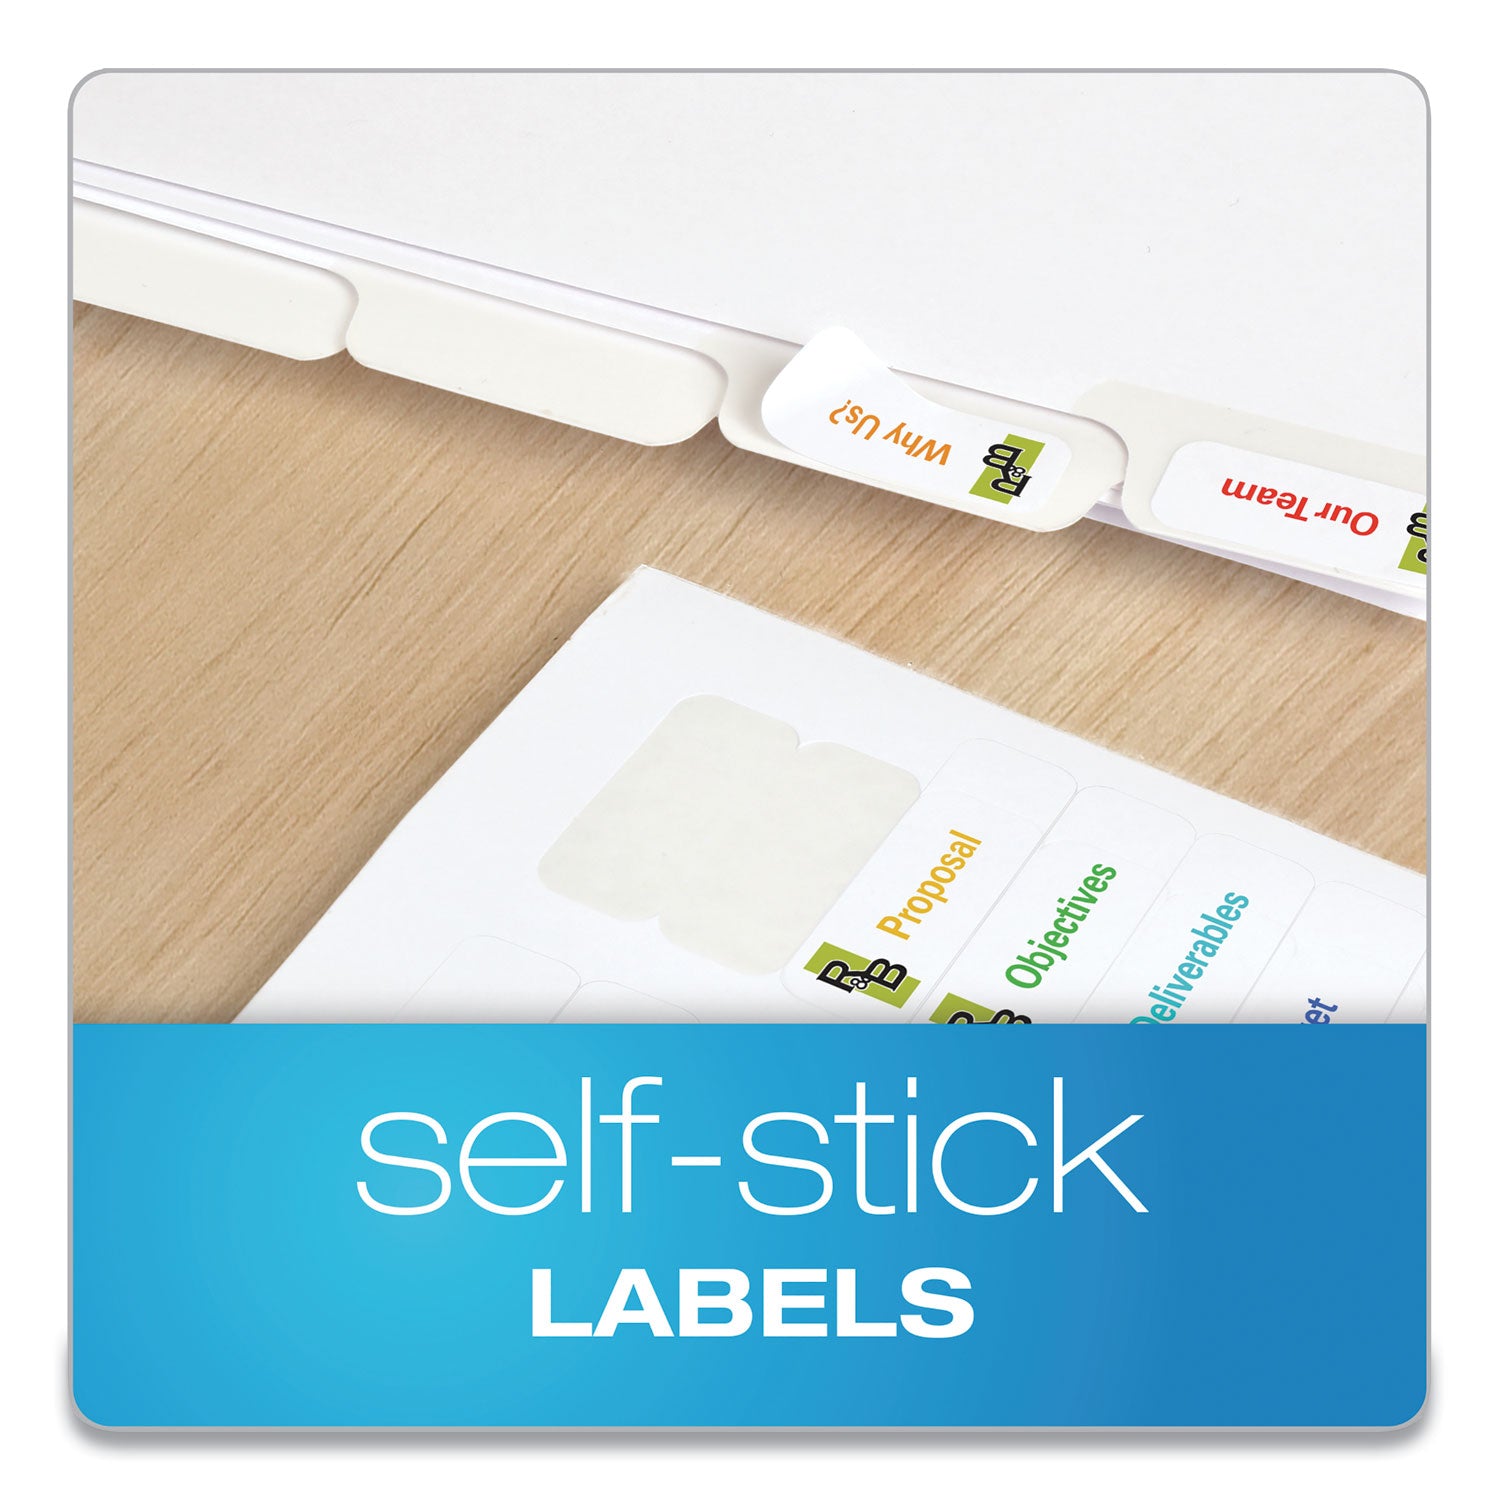 Custom Label Tab Dividers with Self-Adhesive Tab Labels, 8-Tab, 11 x 8.5, White, 5 Sets - 